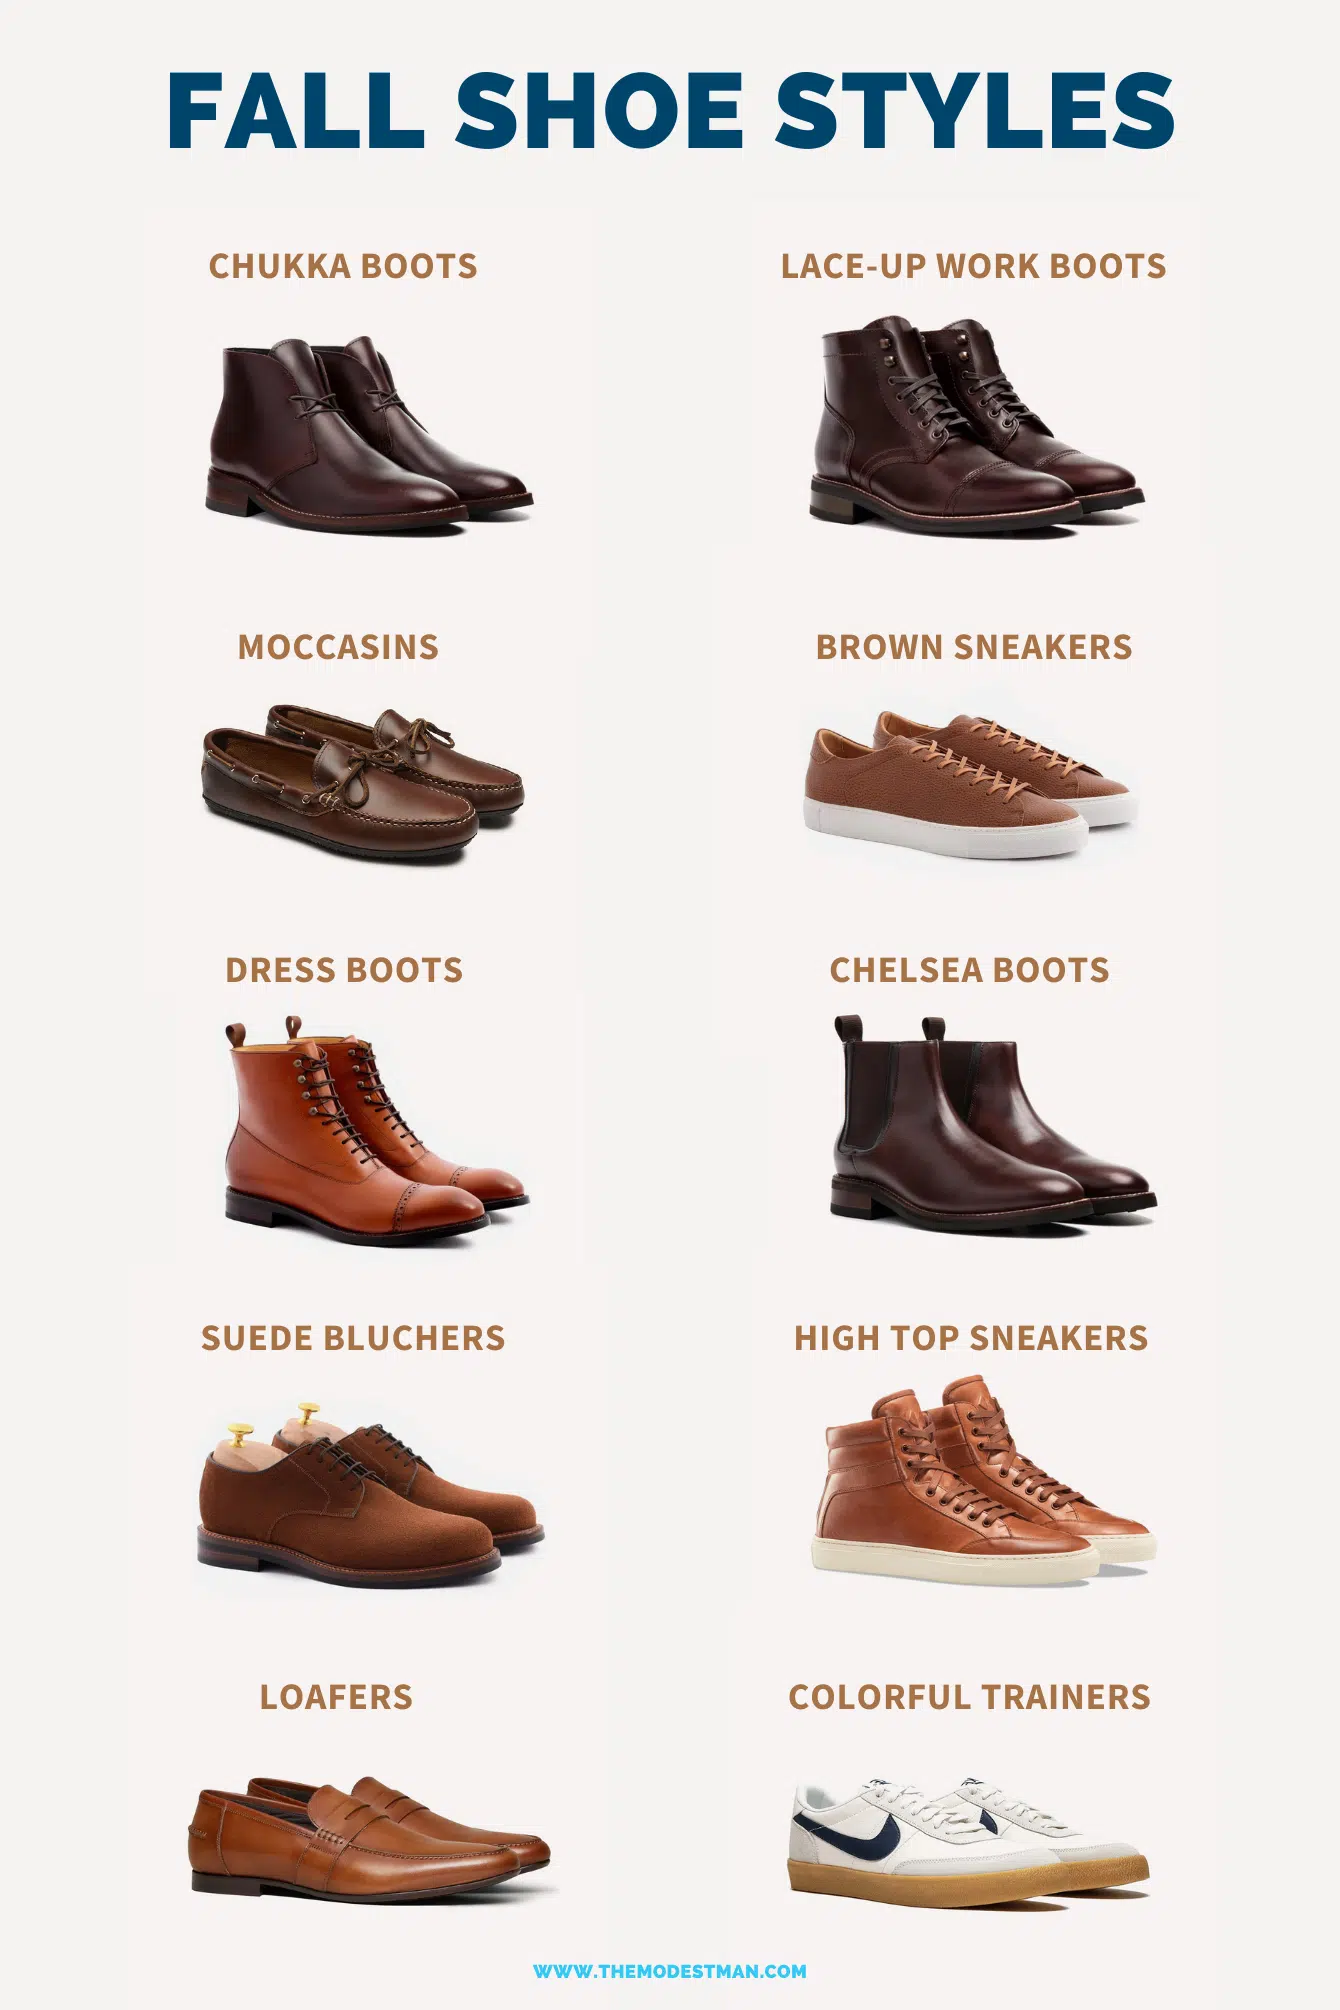 Fall shoe styles for men